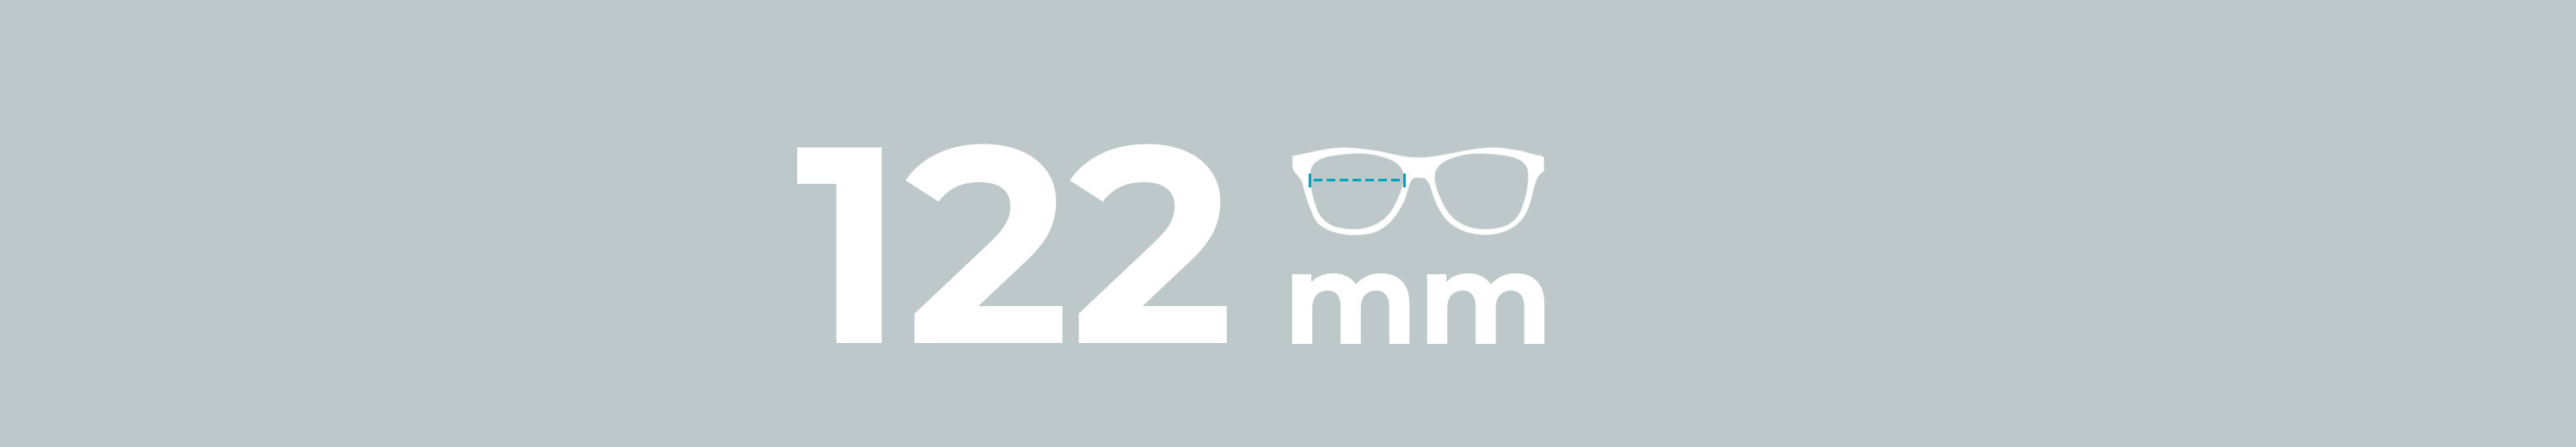 Lens Size: 122mm Glasses